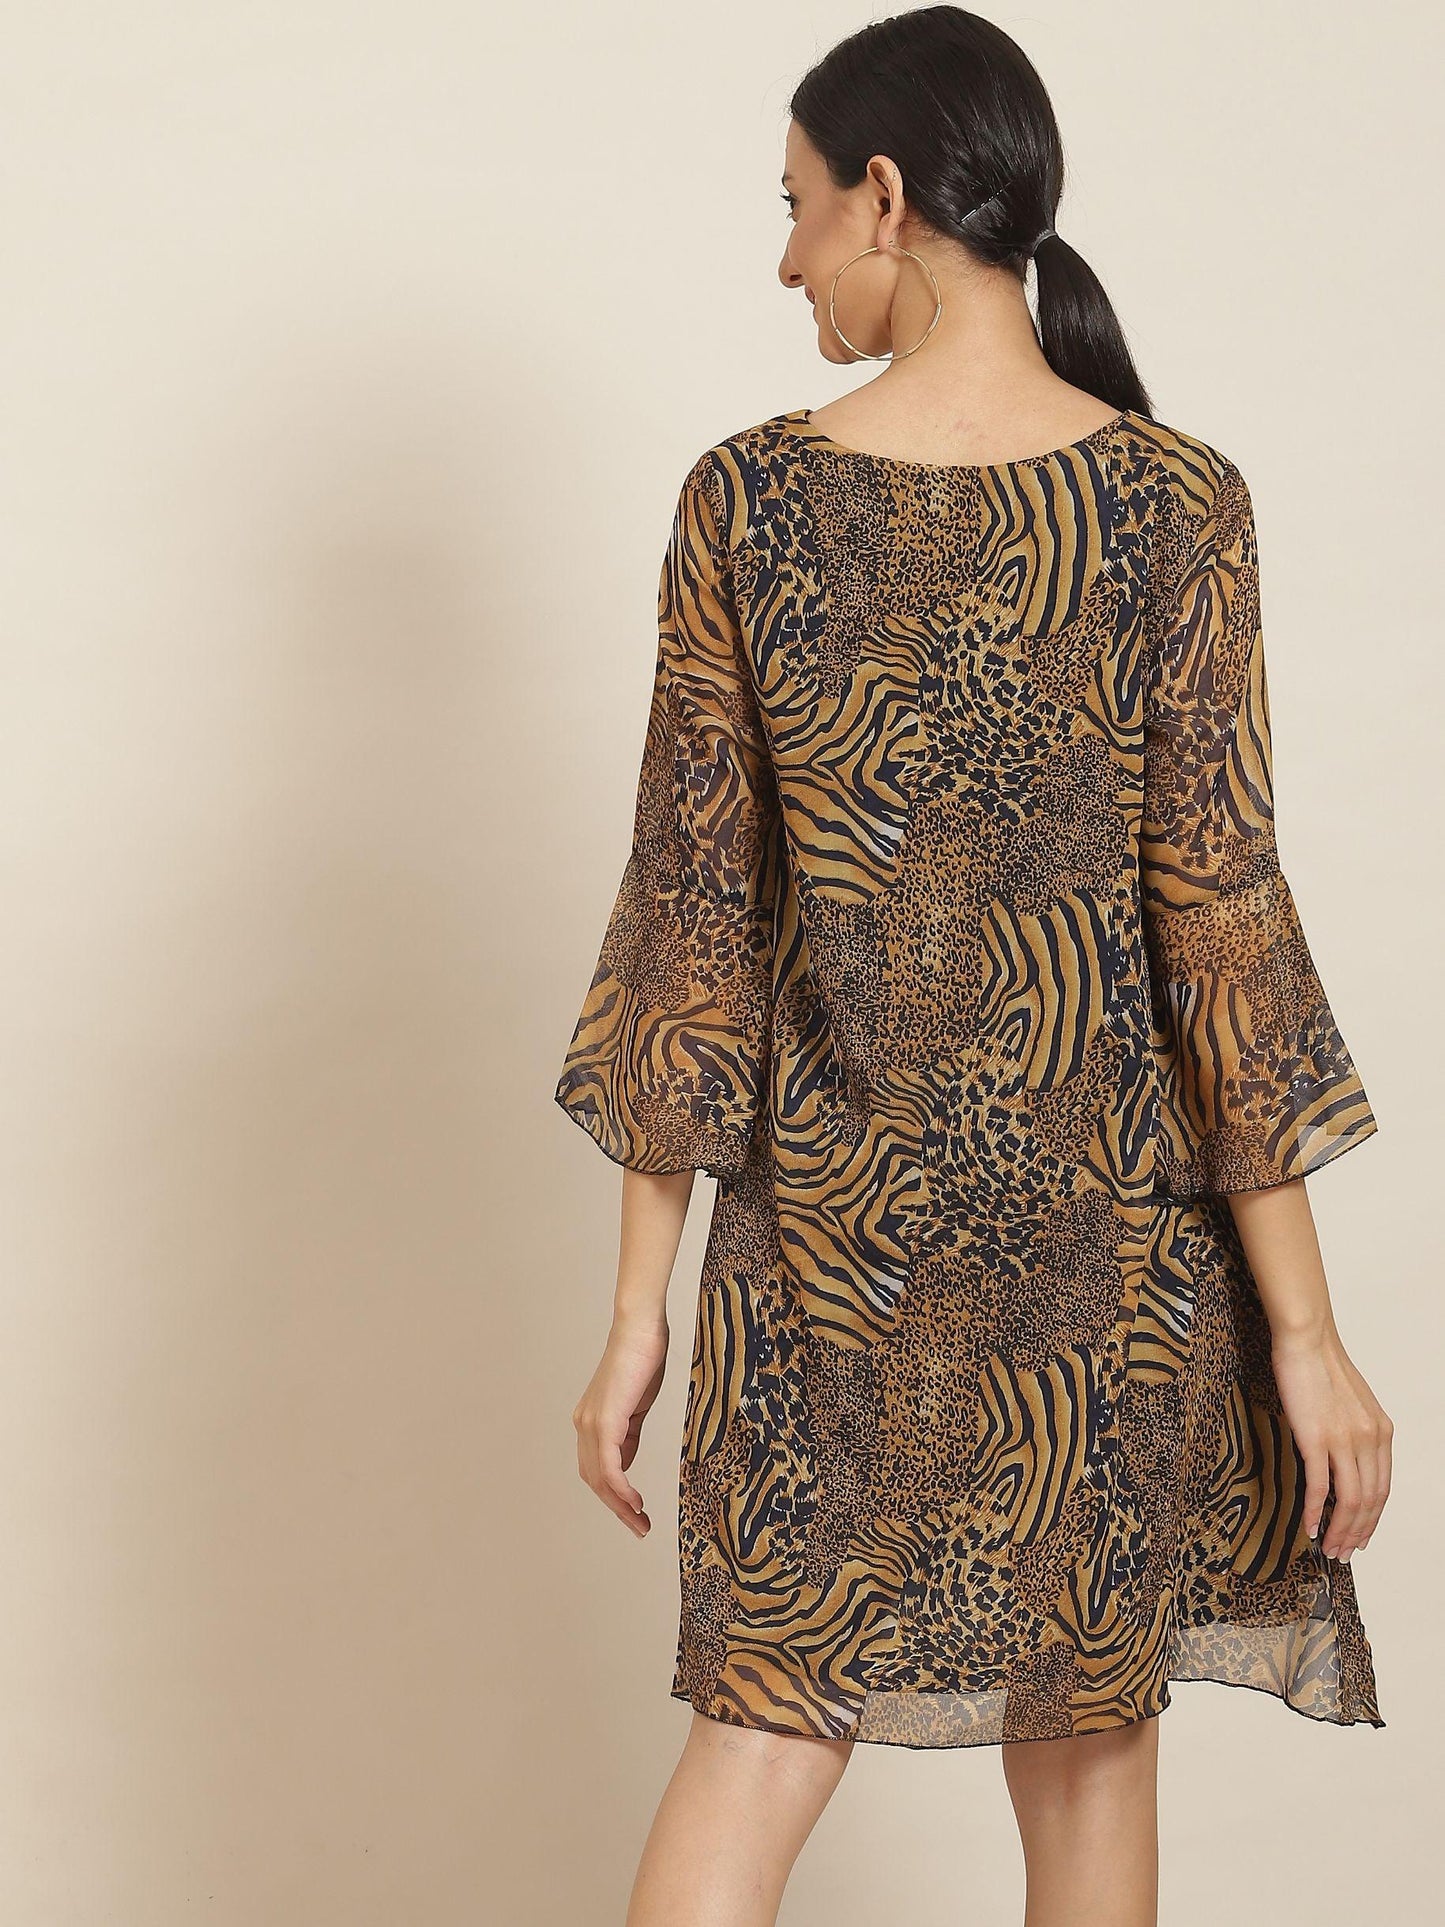 Qurvii Tiger Print A-line Dress - Qurvii India